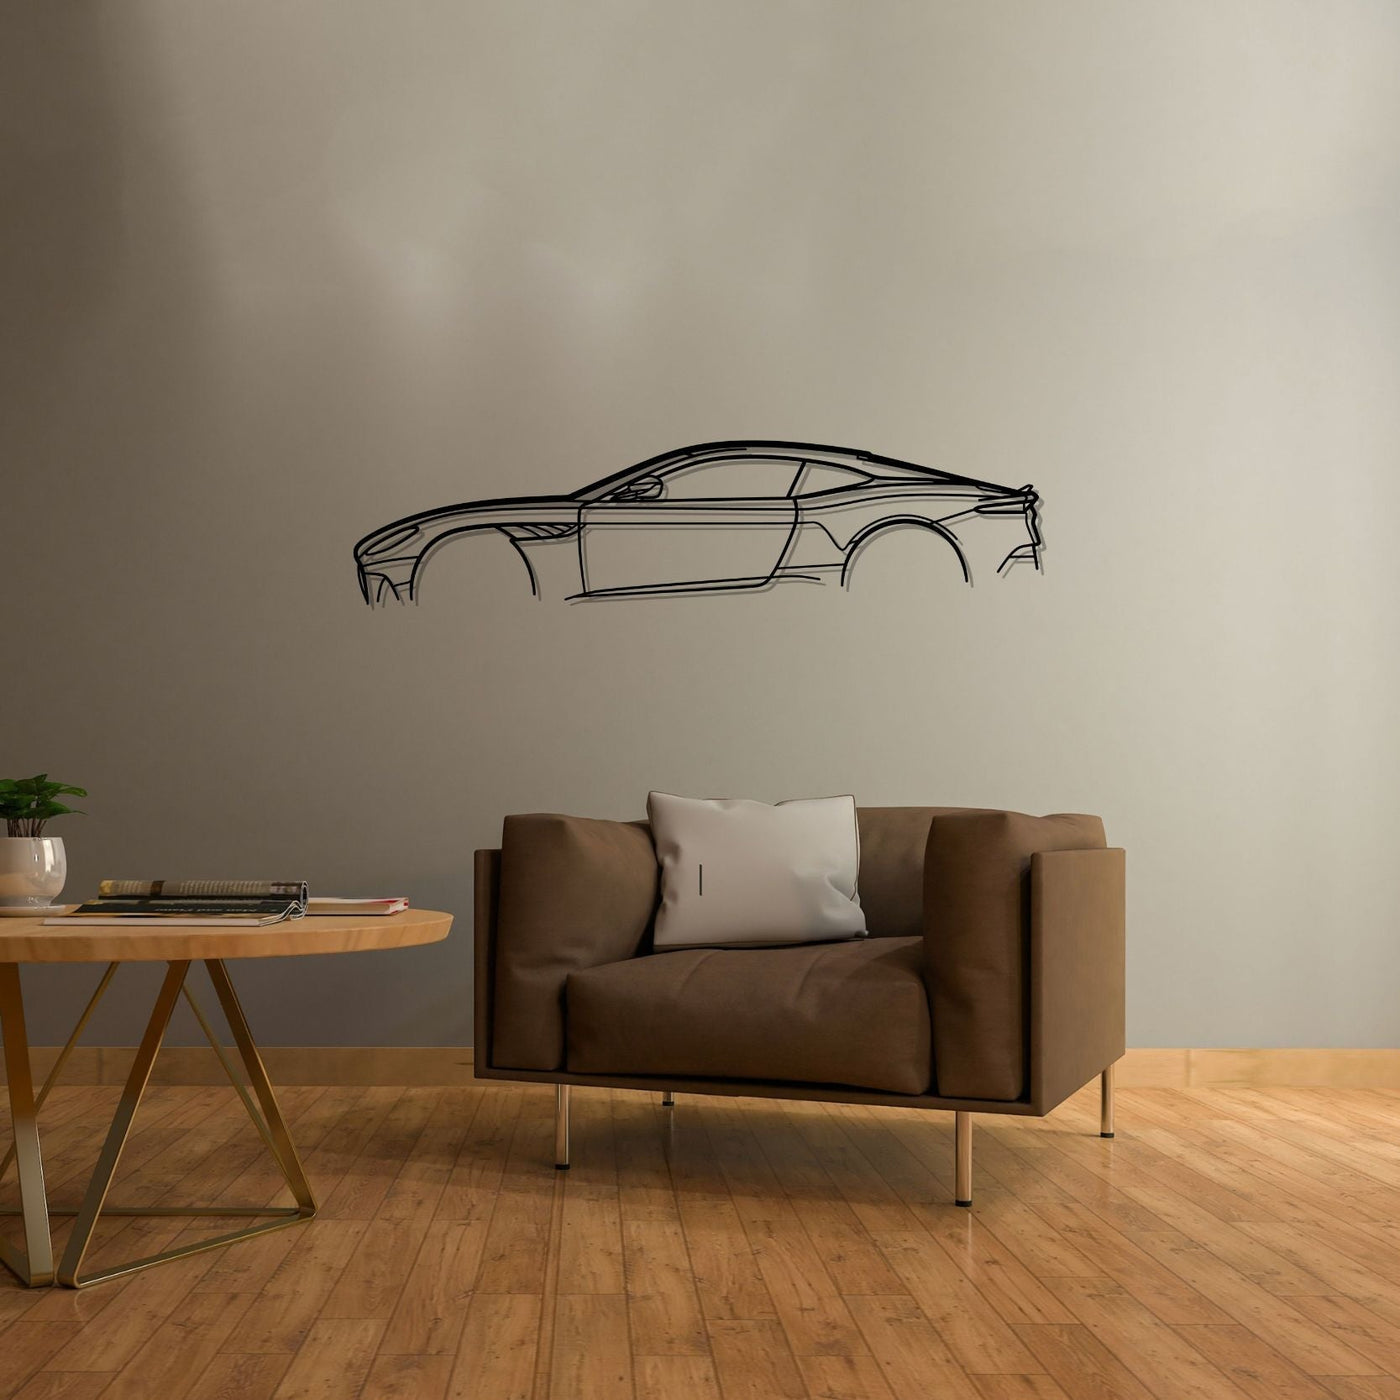 Aston DBS Superleggera Classic Silhouette Metal Wall Art